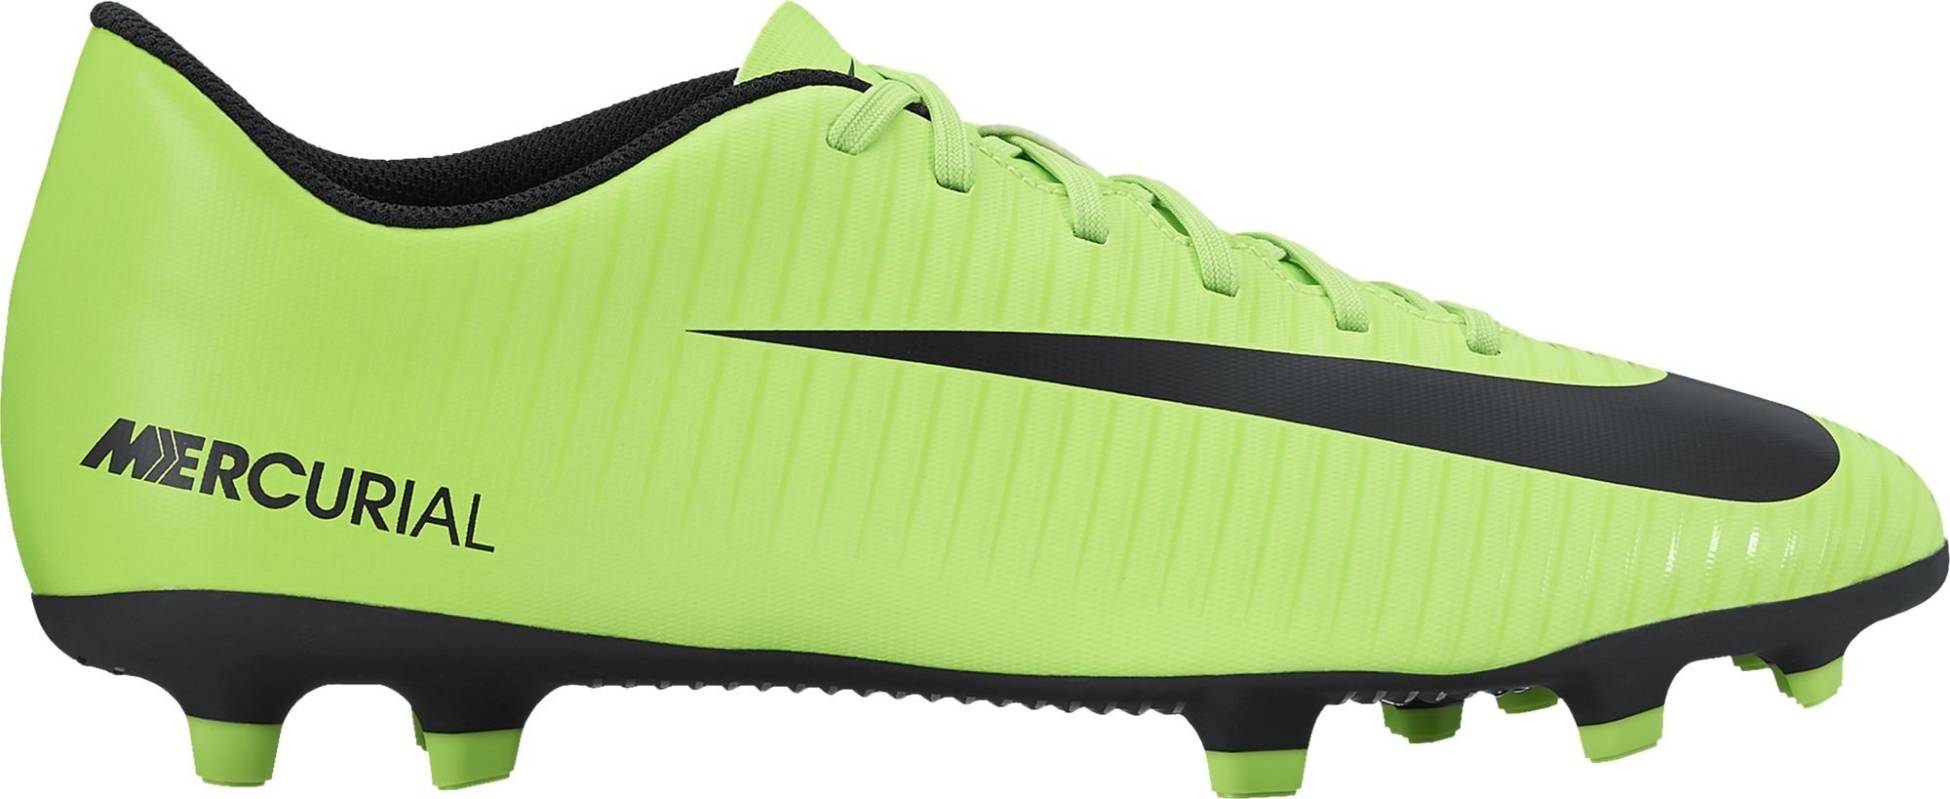 neon green nike soccer cleats